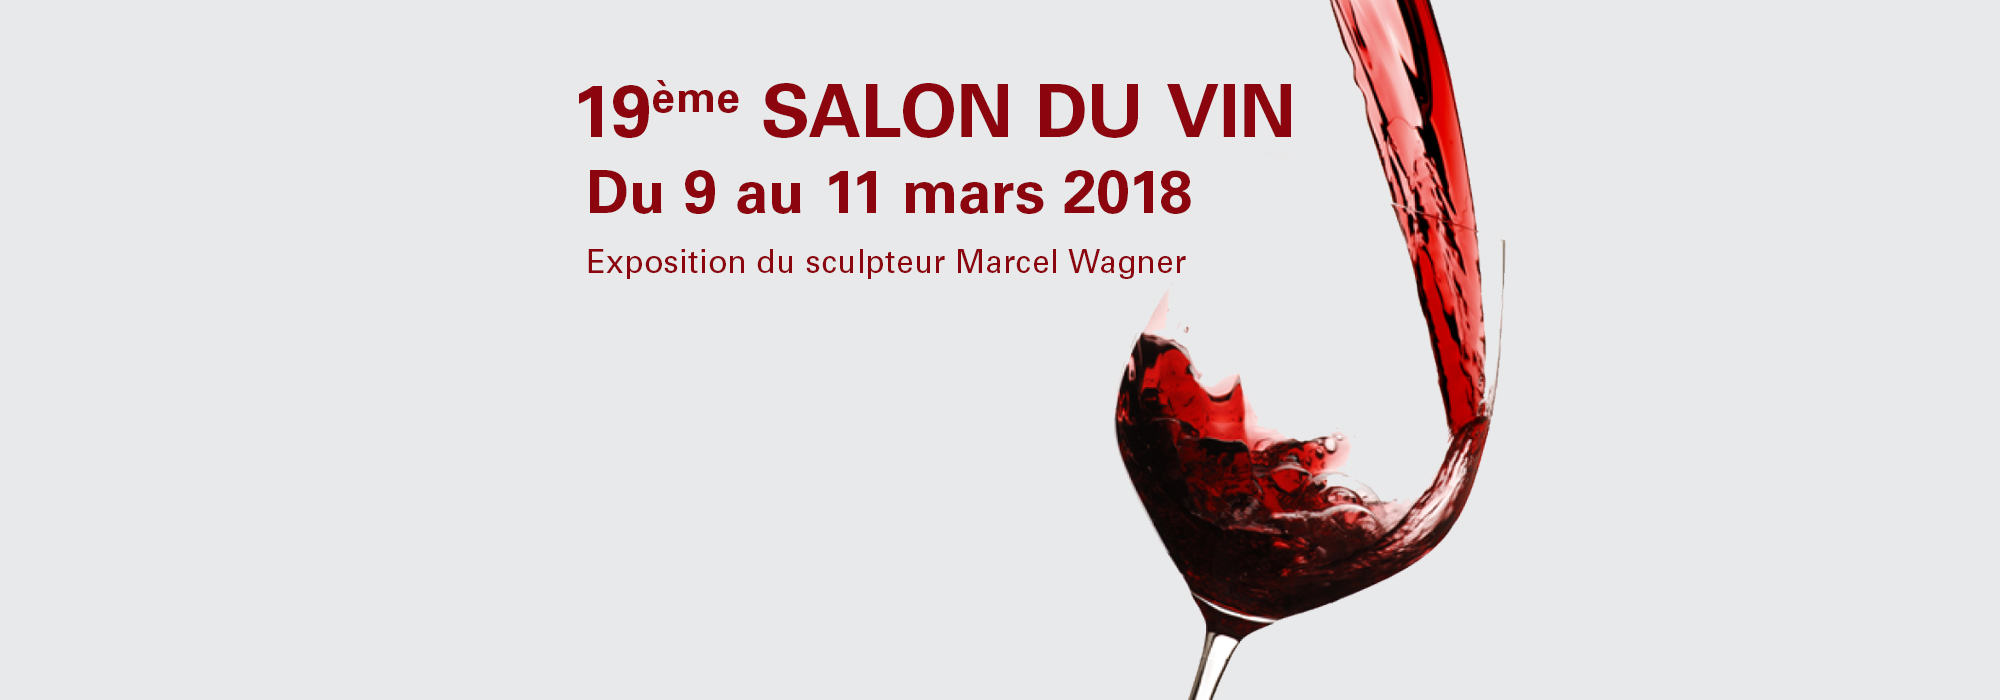 Salon du Vin 2018